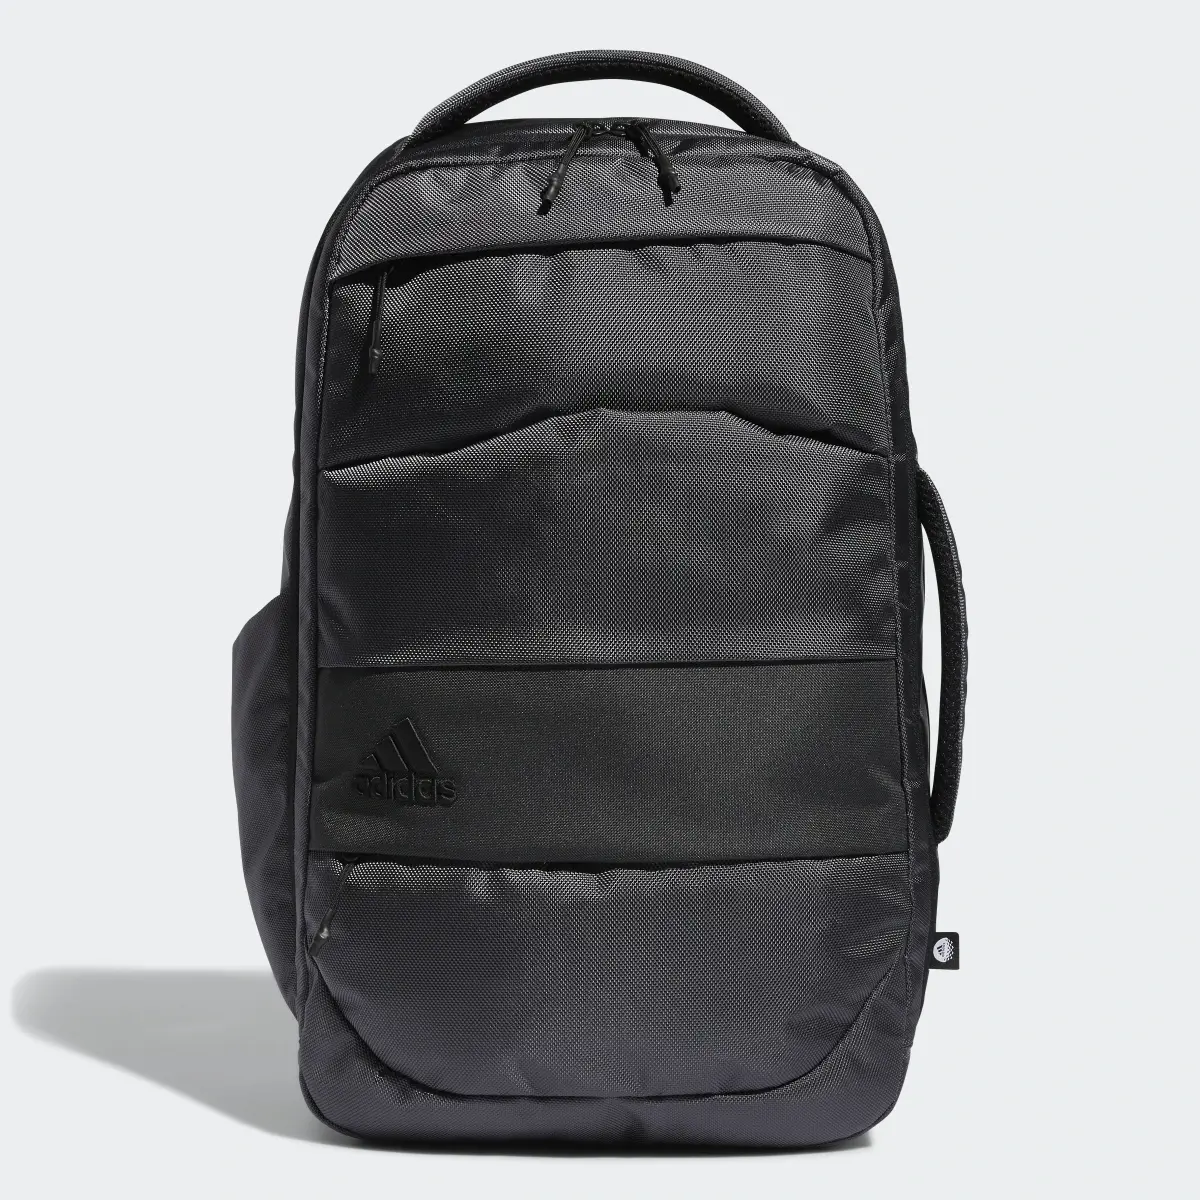 Adidas Golf Premium Backpack. 1